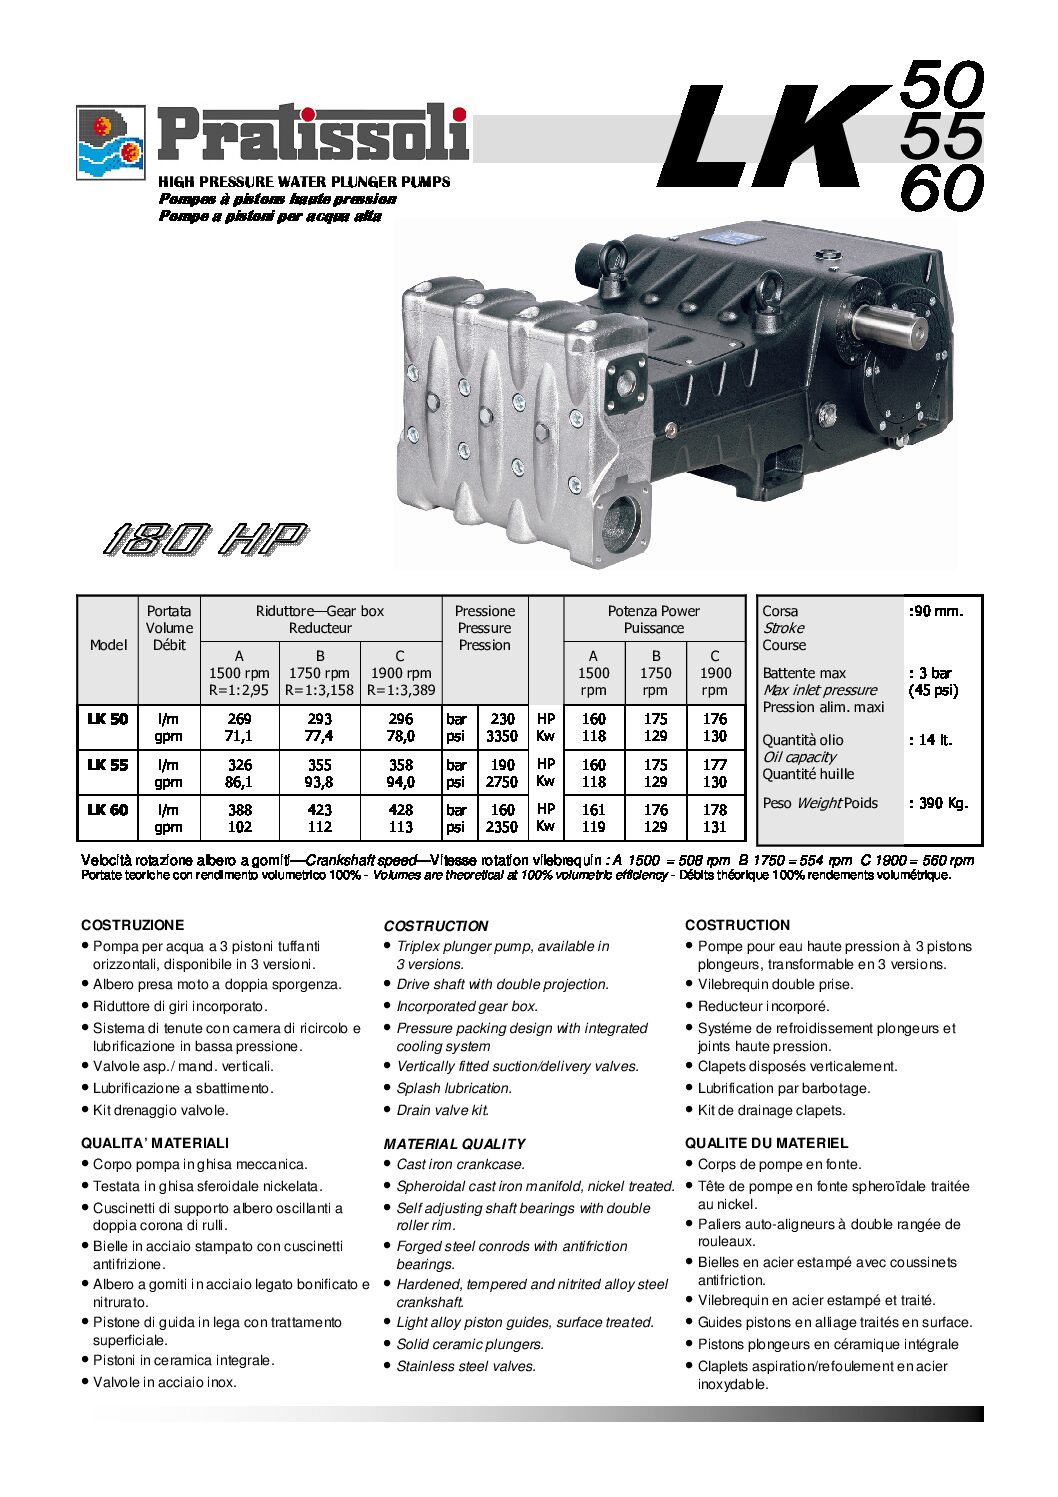 Pratissoli LK Series 50/55/60 Pump Data Sheet